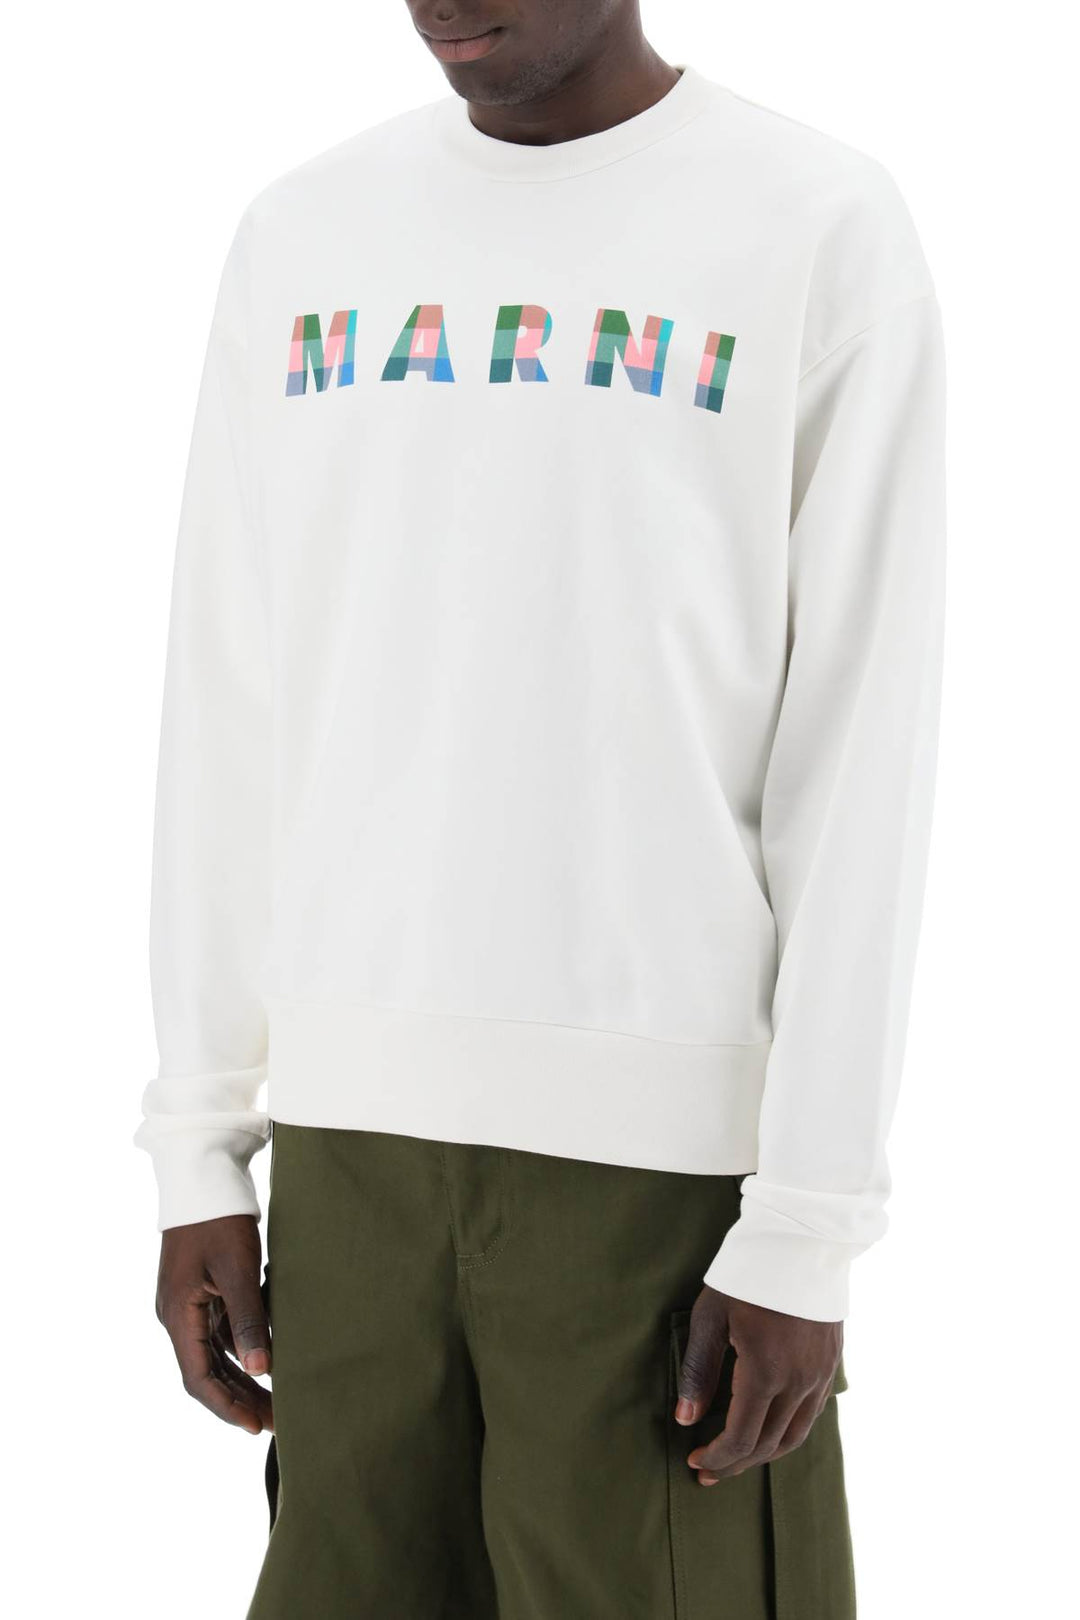 Marni Sweatshirt With Plaid Logo   Bianco